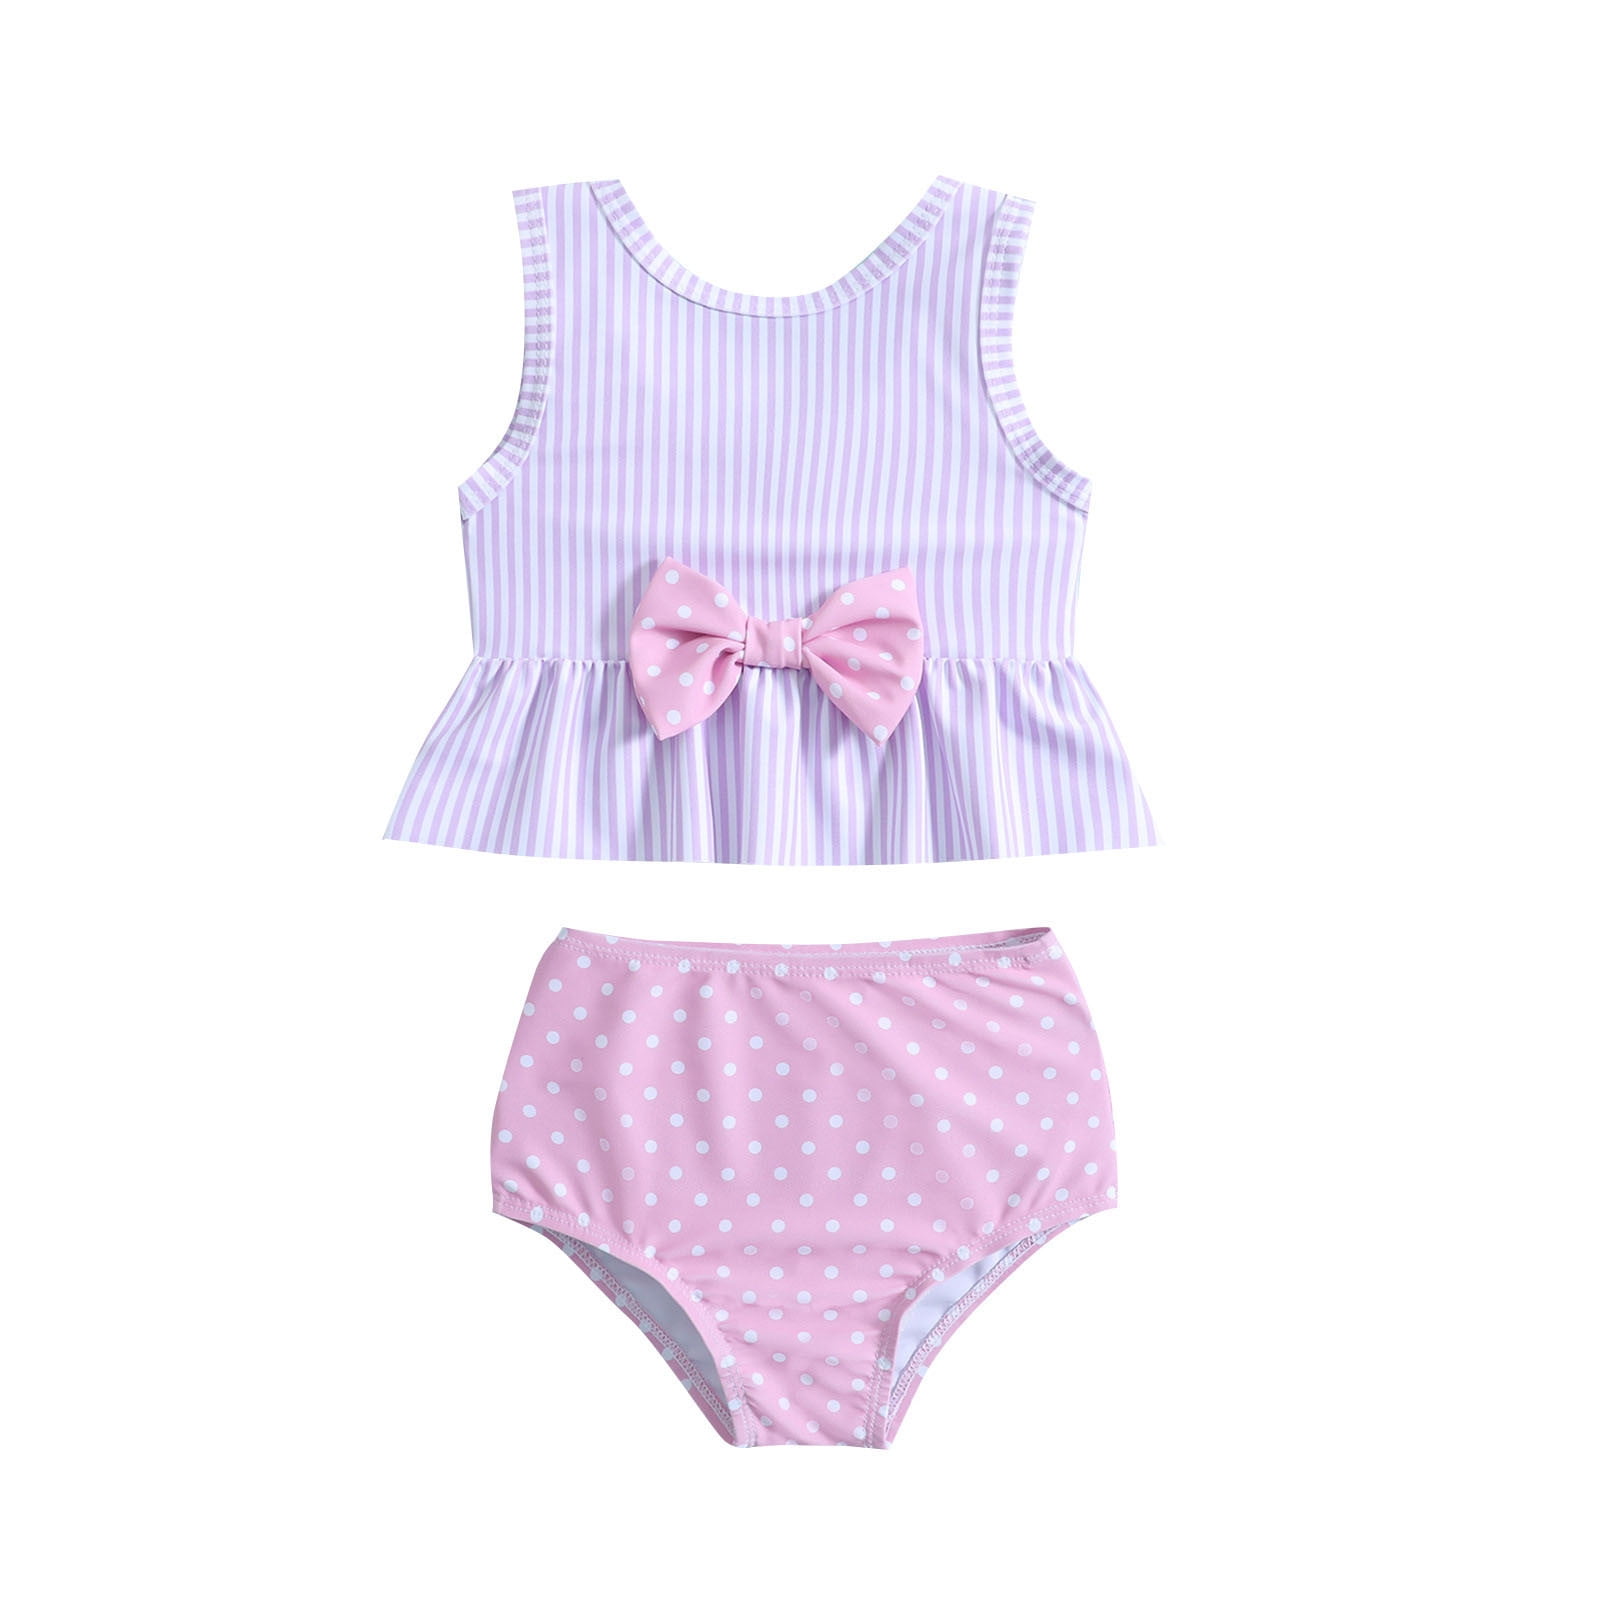 JDEFEG 2pc Girl Bathing Suit Size 12 Summer Toddler Girls Striped ...